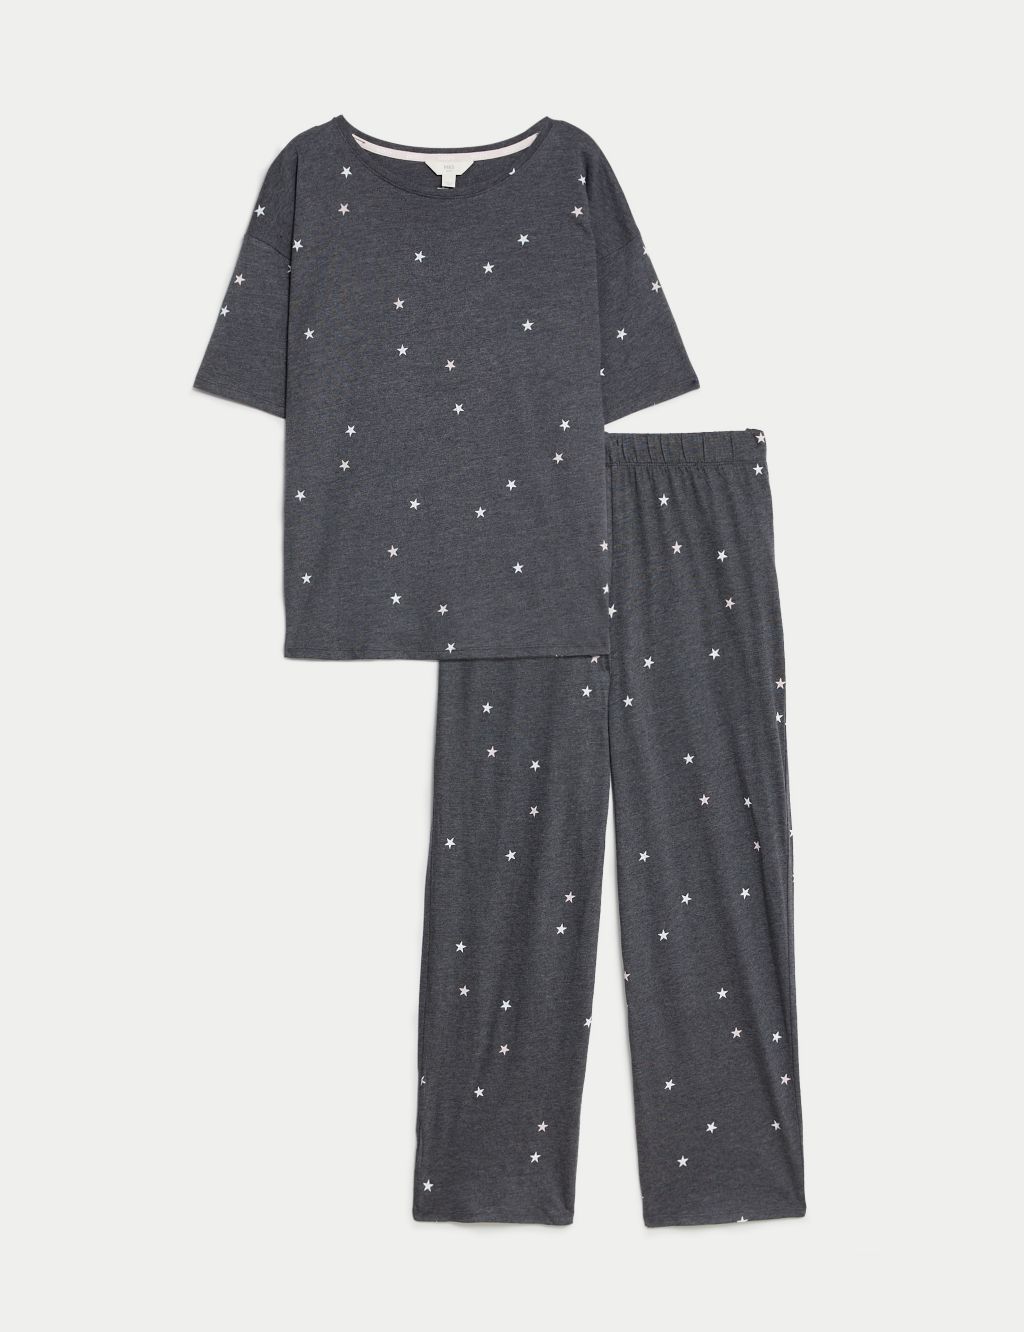 Cotton Modal Star Print Pyjama Set image 2